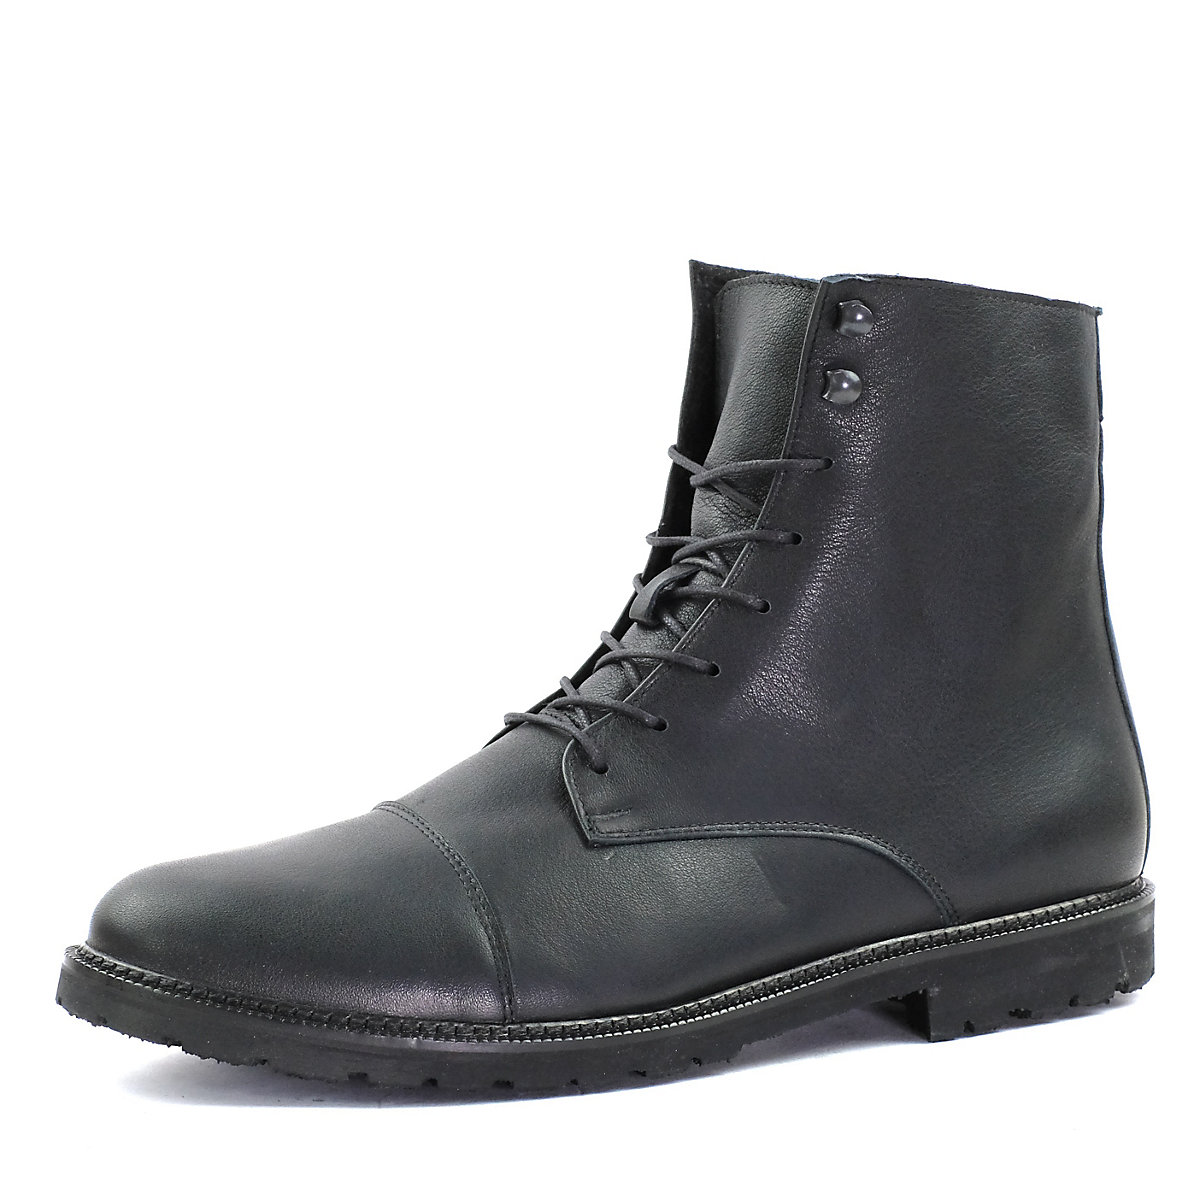 SORBAS Work Boots ’94 Lederstiefel Schnürstiefel schwarz